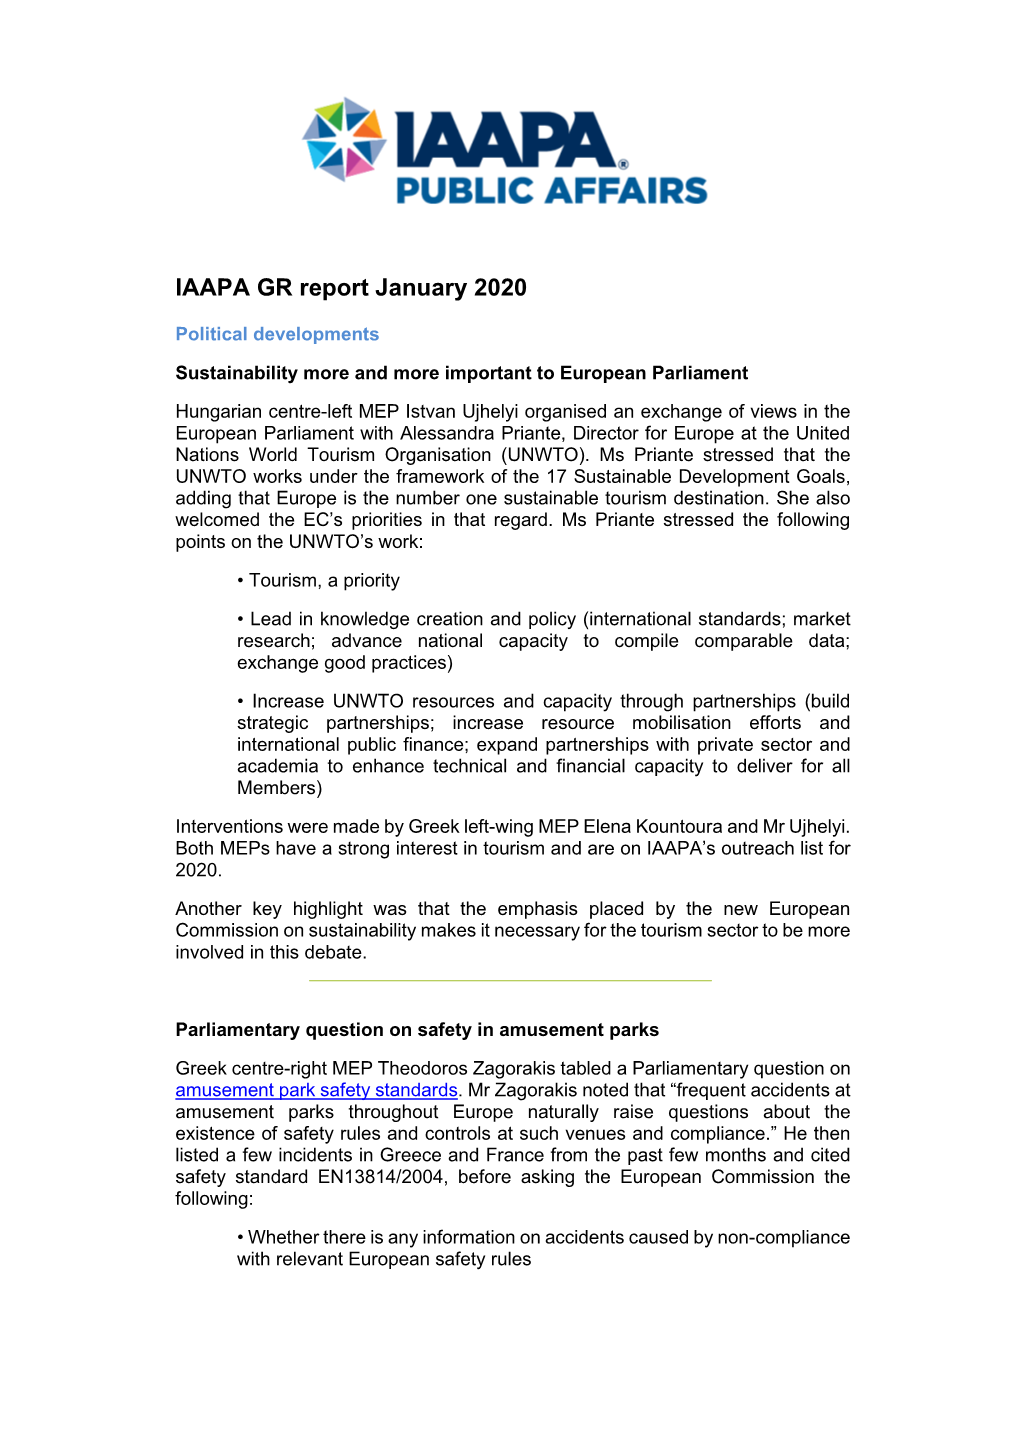 IAAPA GR Report January 2020